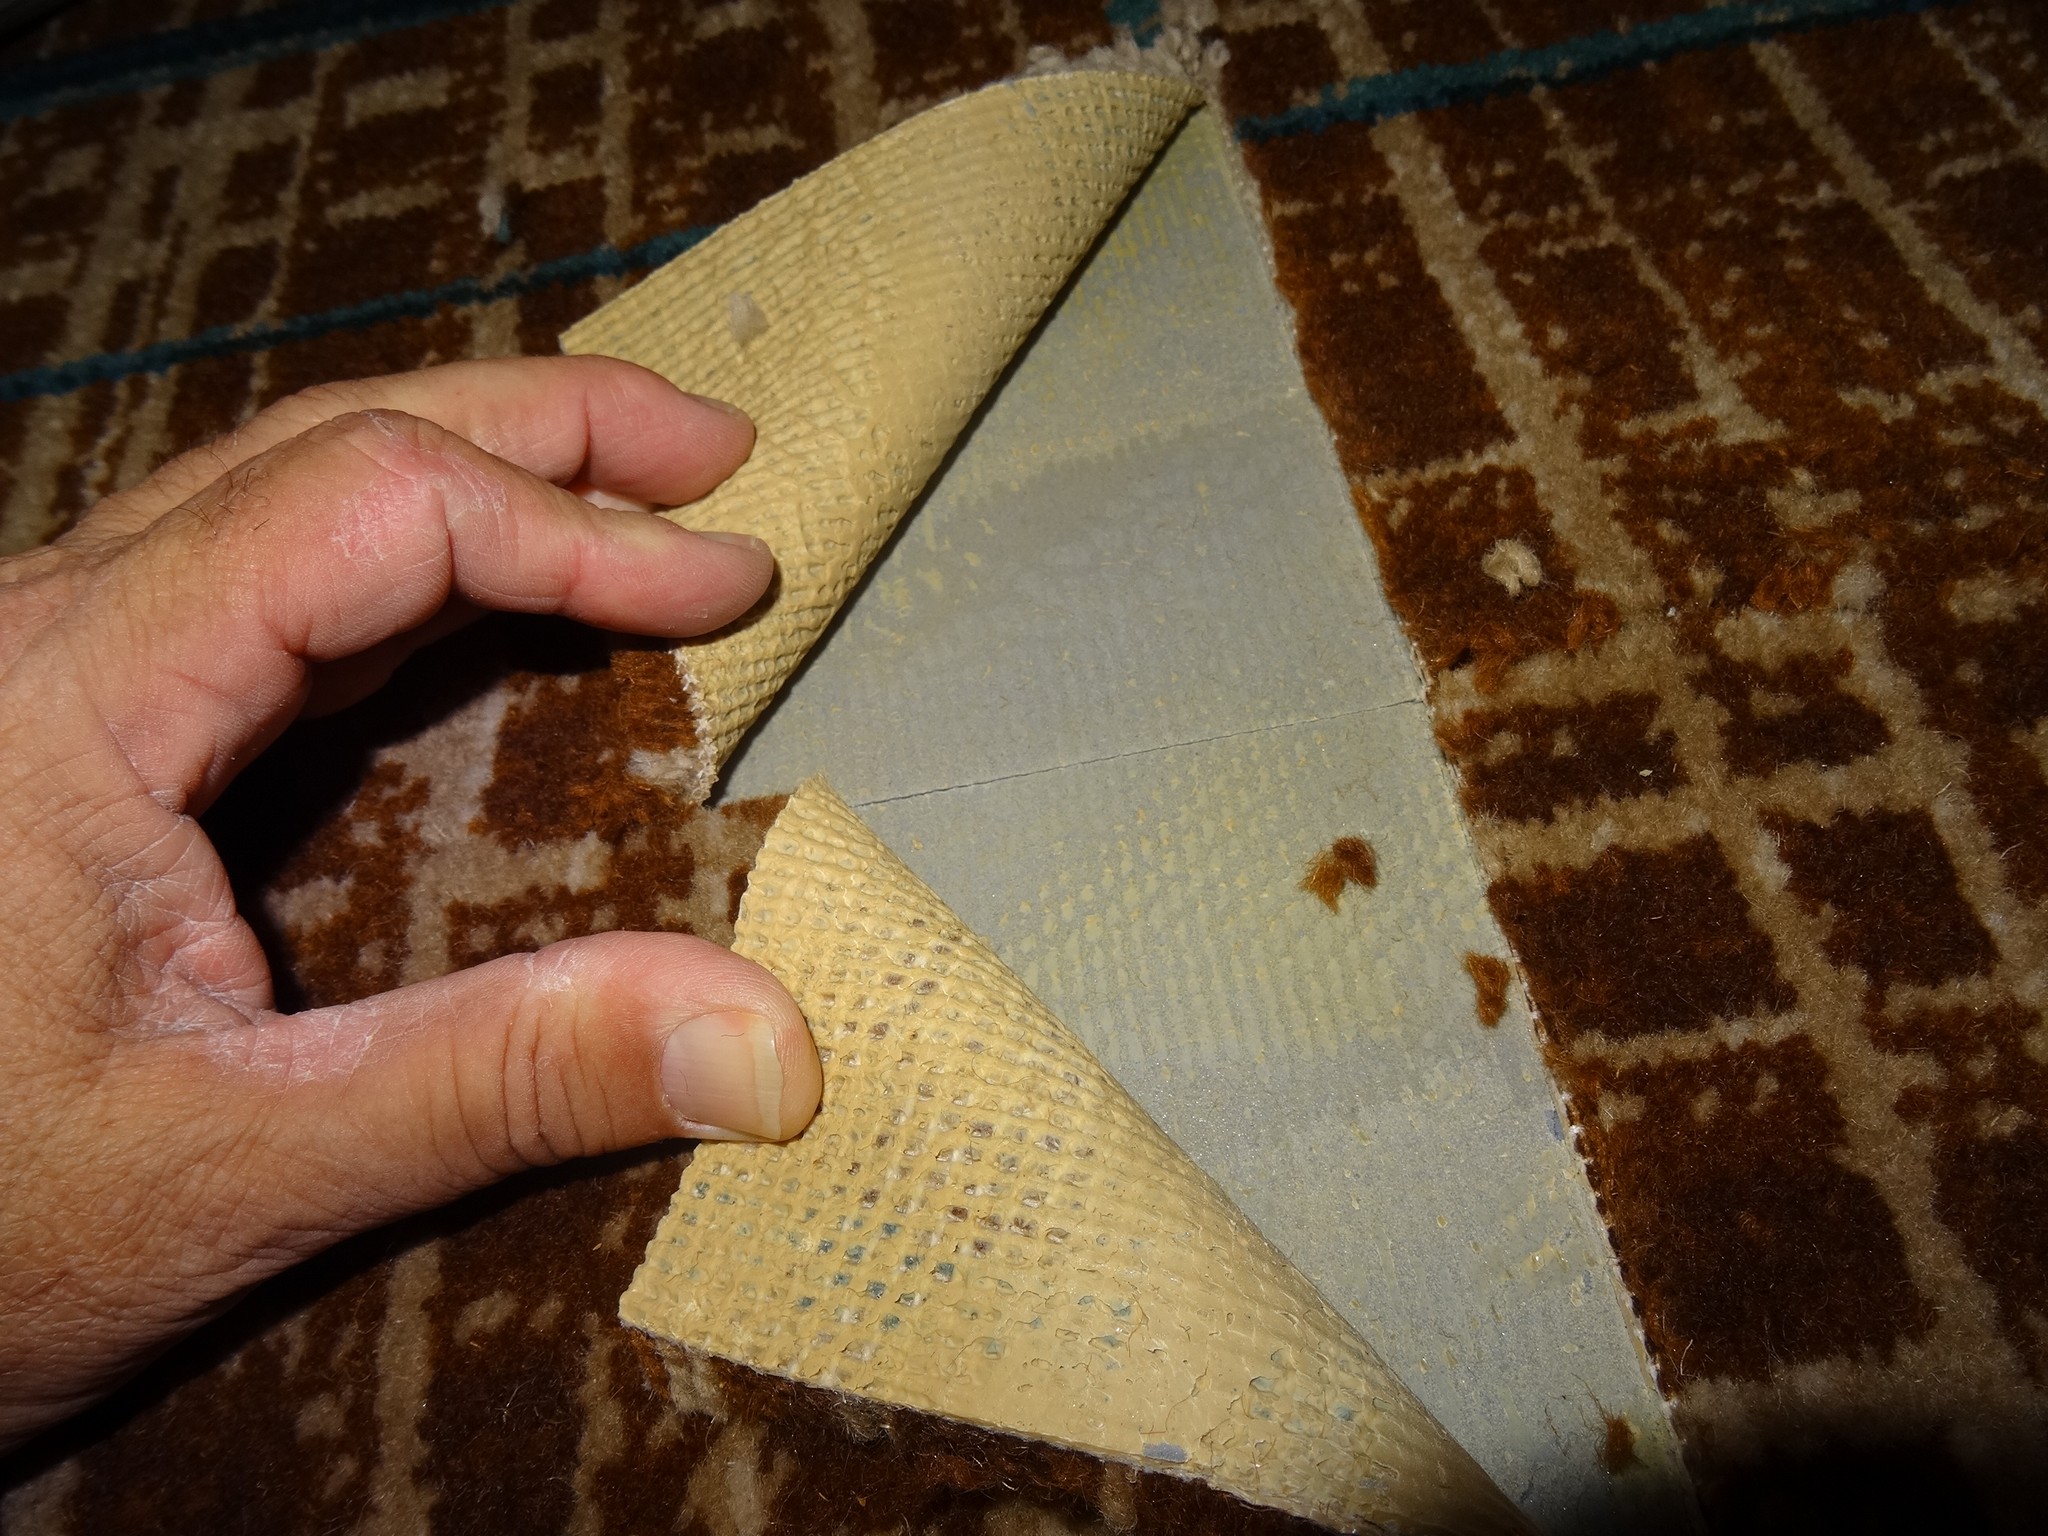 Examination for the presence of carpet seam sealer